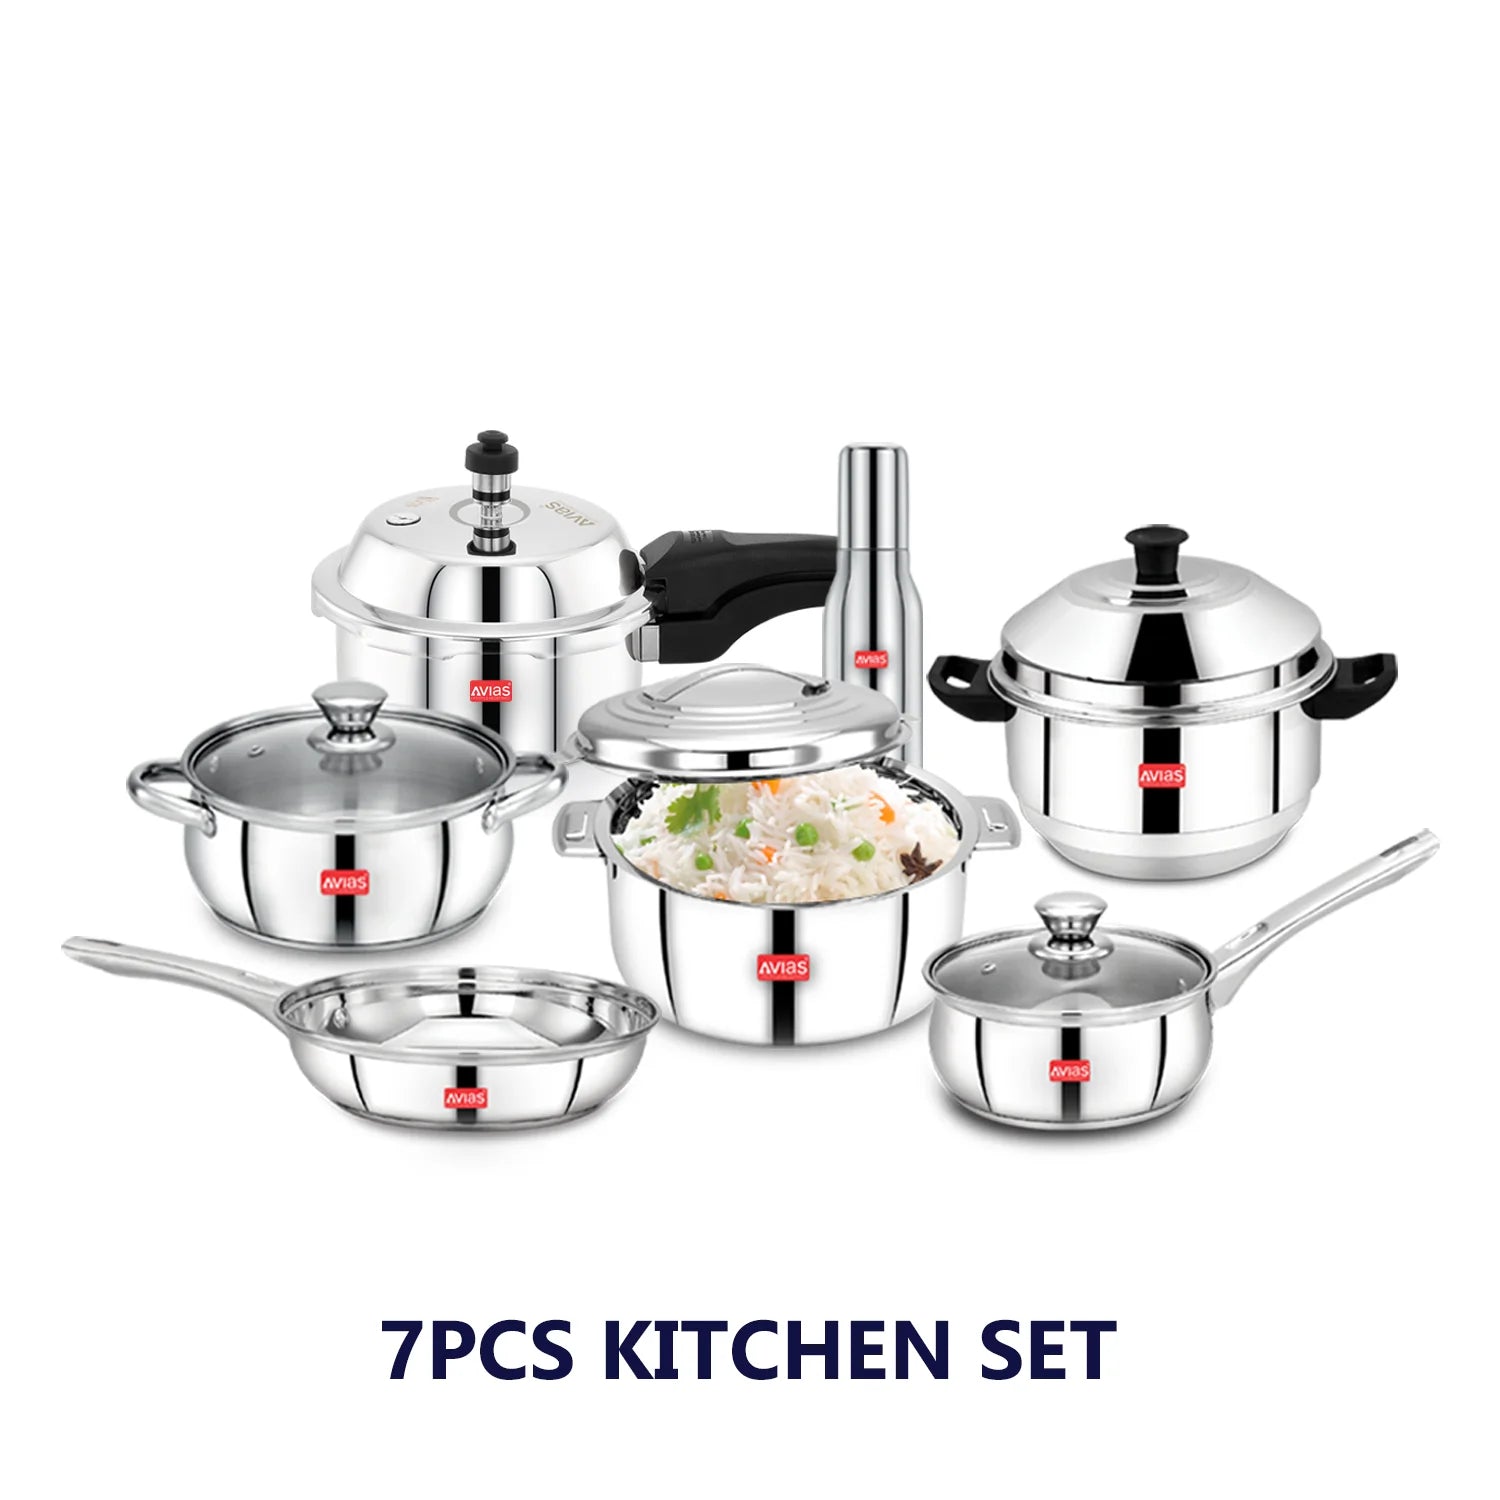 Avias Stainless Steel kitchenware/ cookware 7 PCS Kitchen set